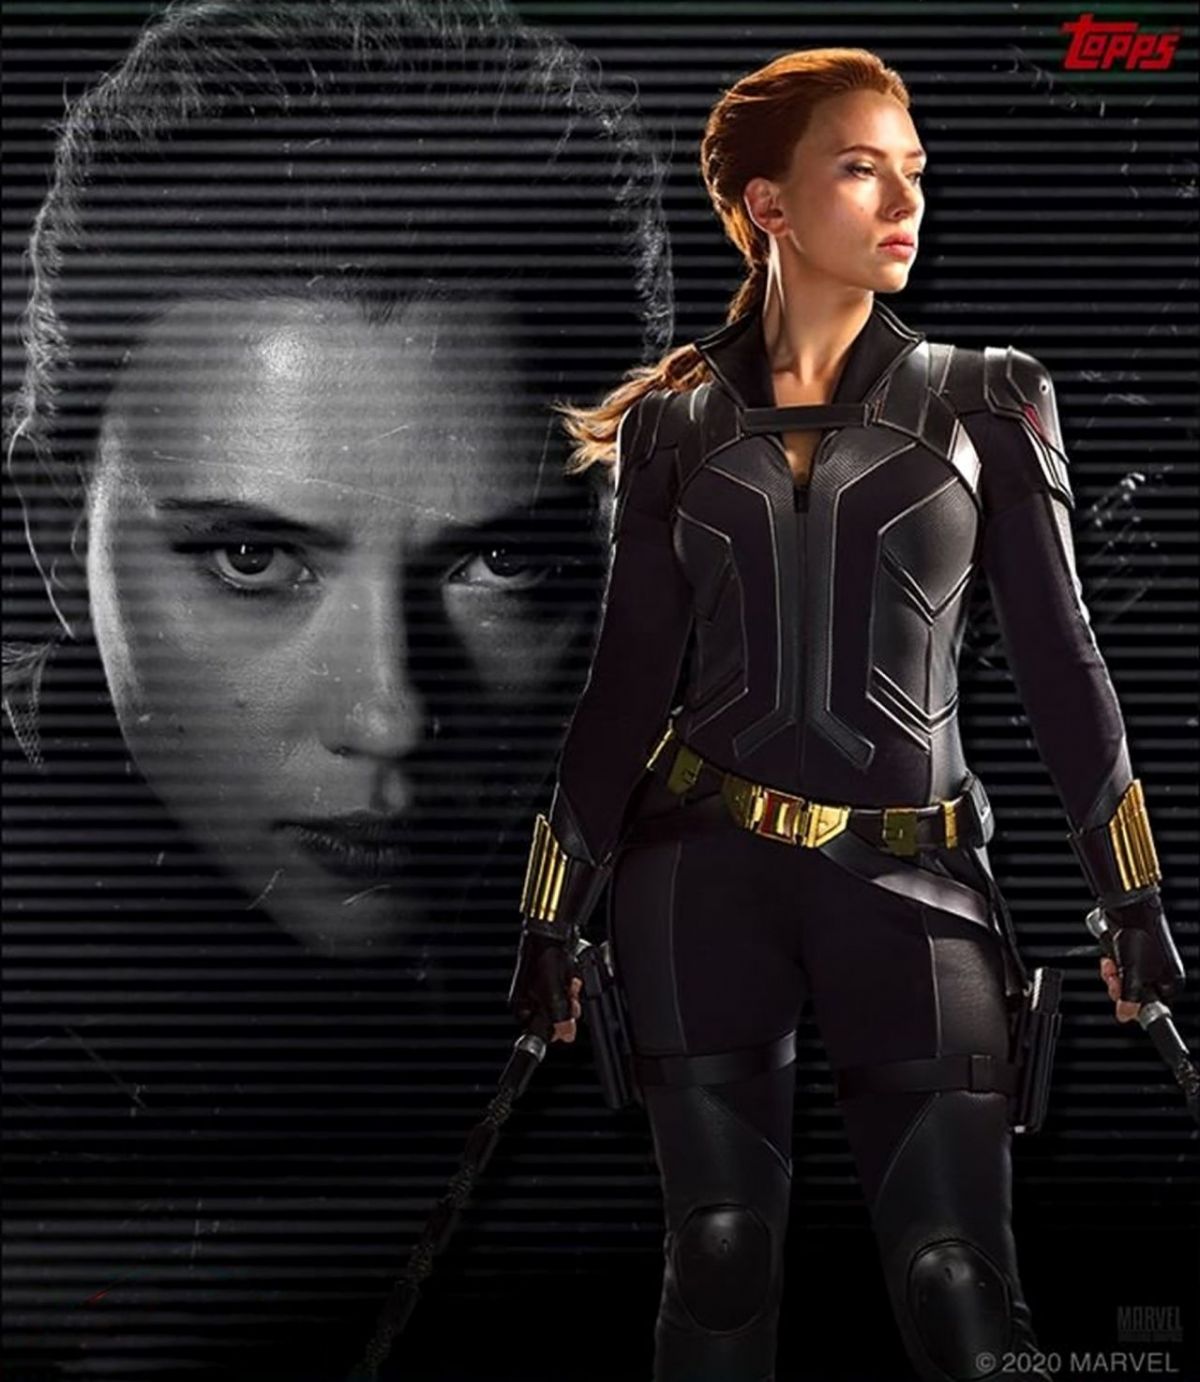 The Black Widow Scarlett Johansson 2020 Movie Film Poster 24x36"/60x90cm 